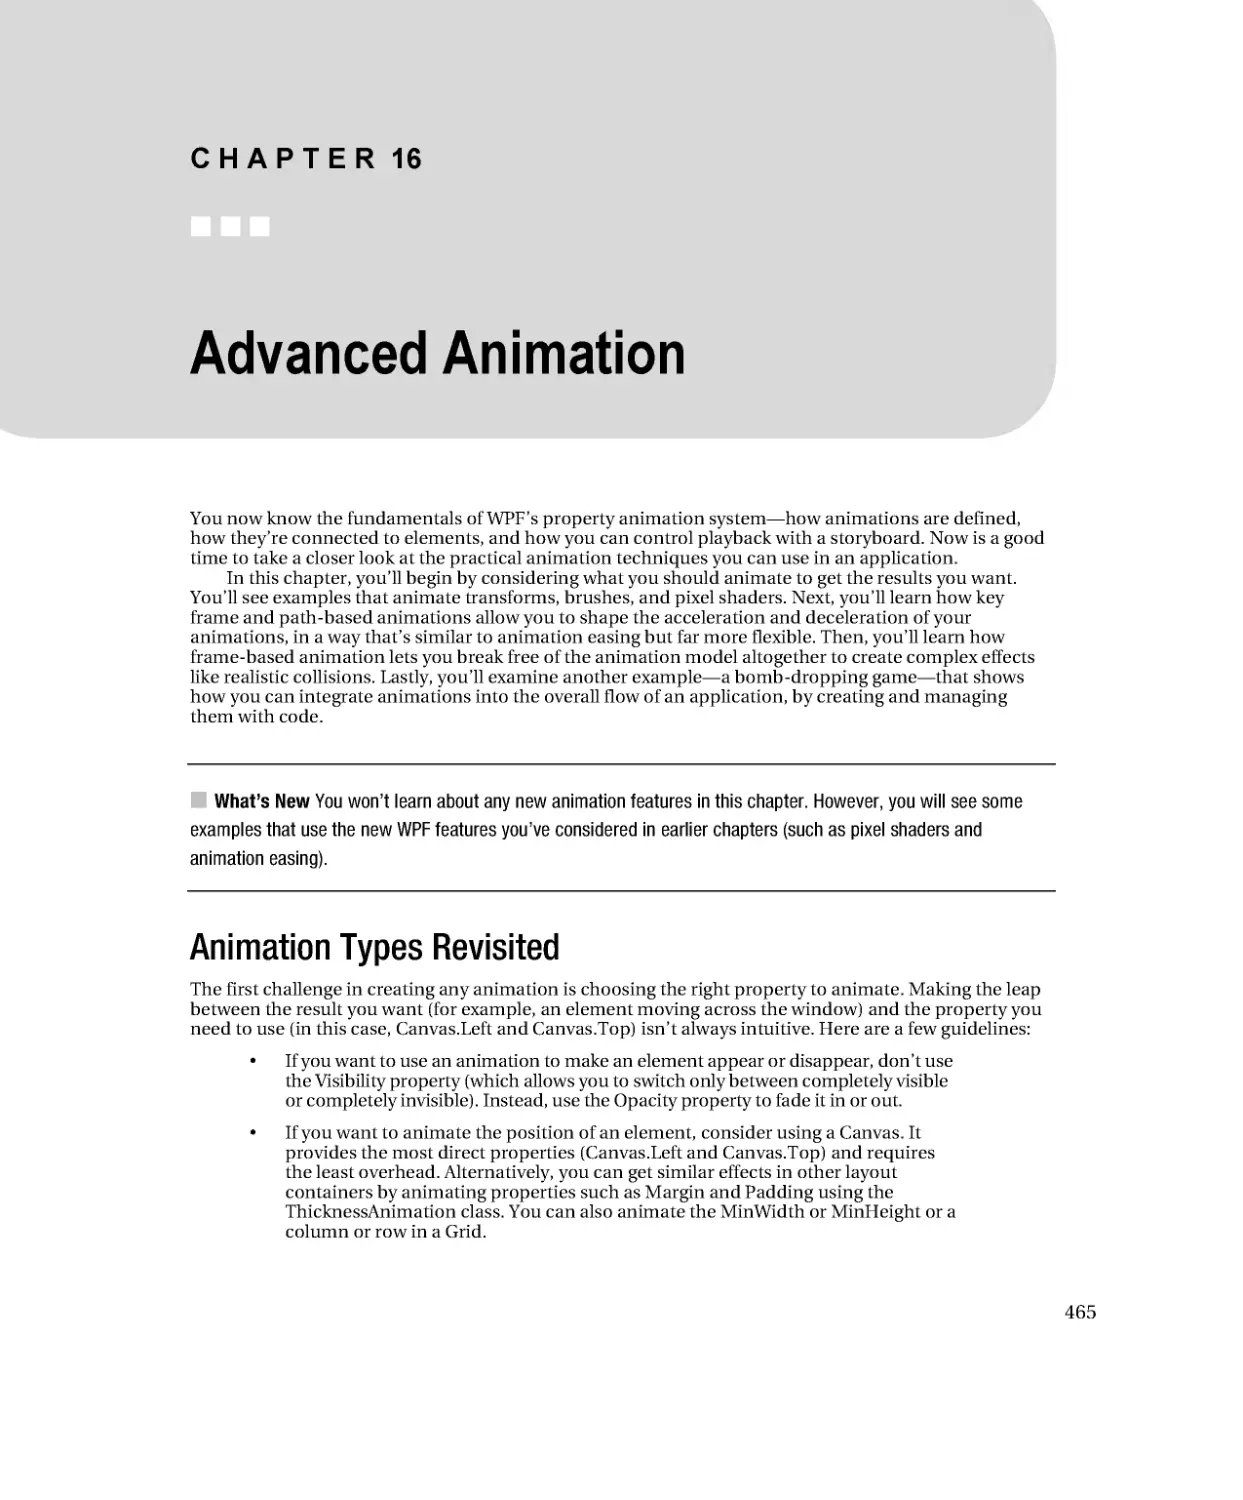 Advanced Animation